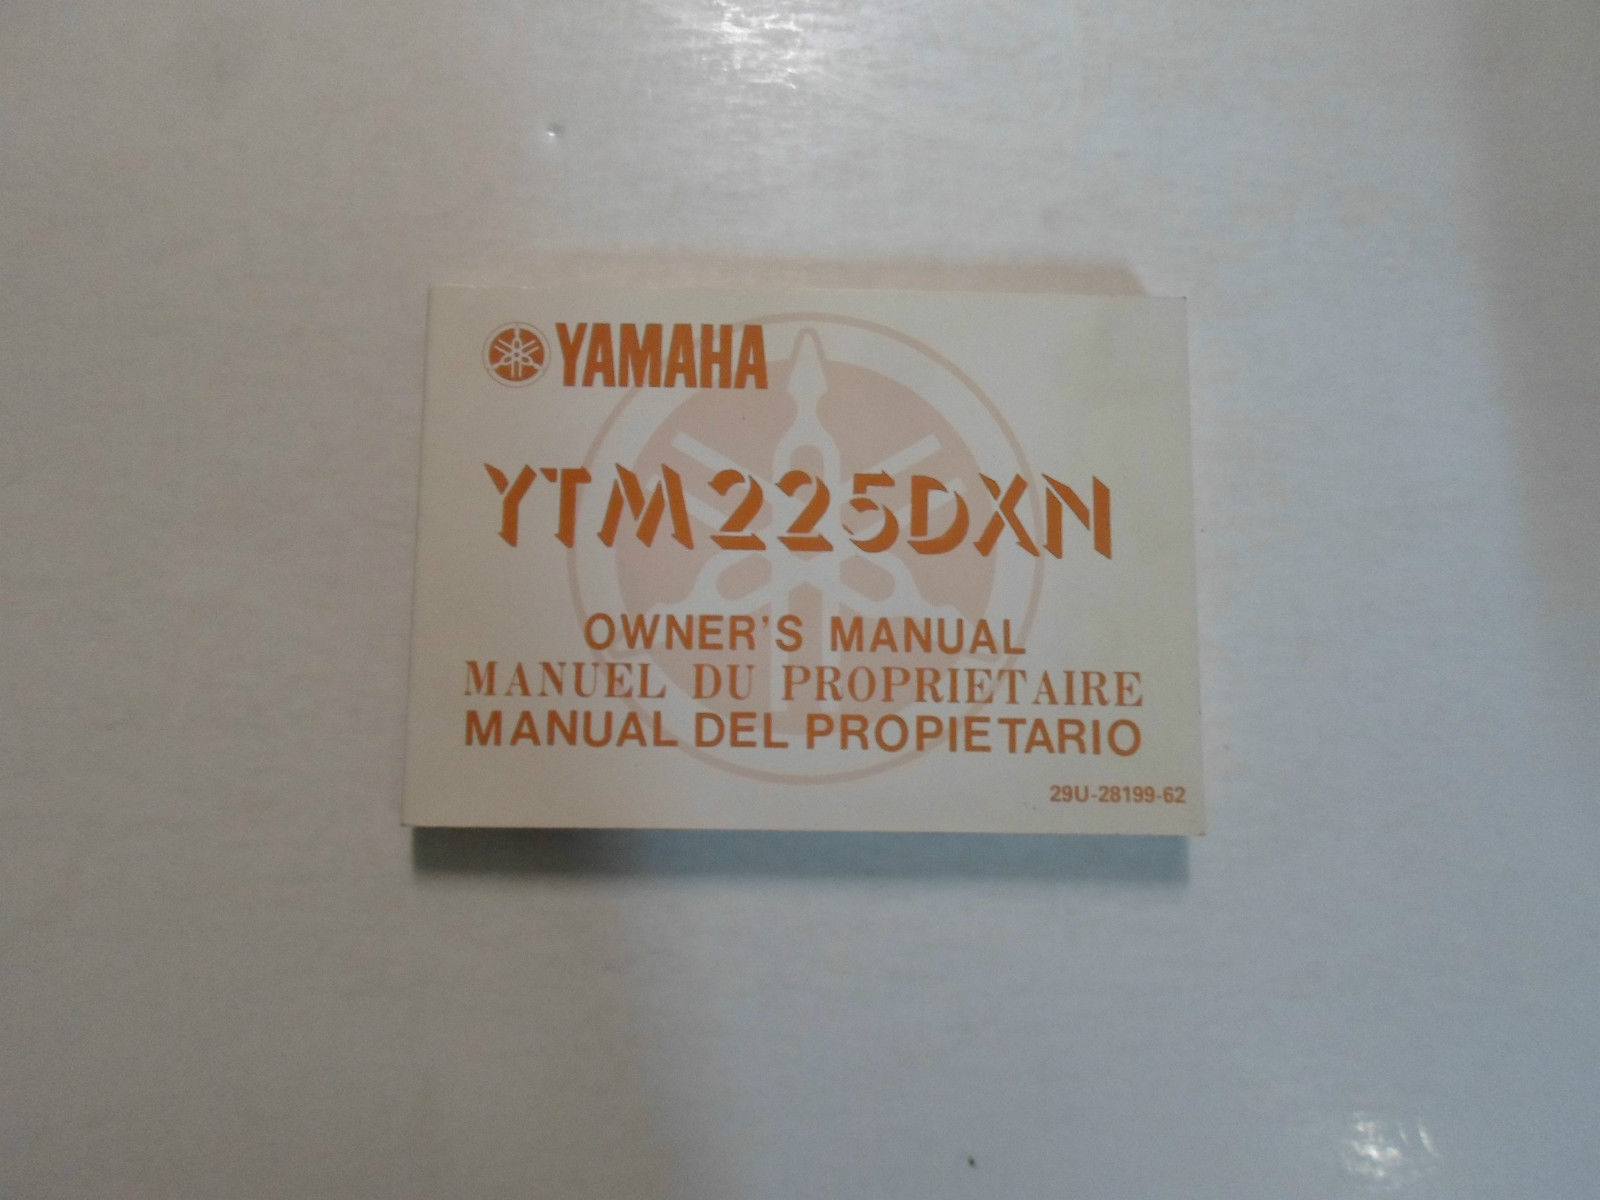 1985 Yamaha YTM225DXN Owners Manual FACTORY OEM BOOK 85 English Spanish French - $22.46